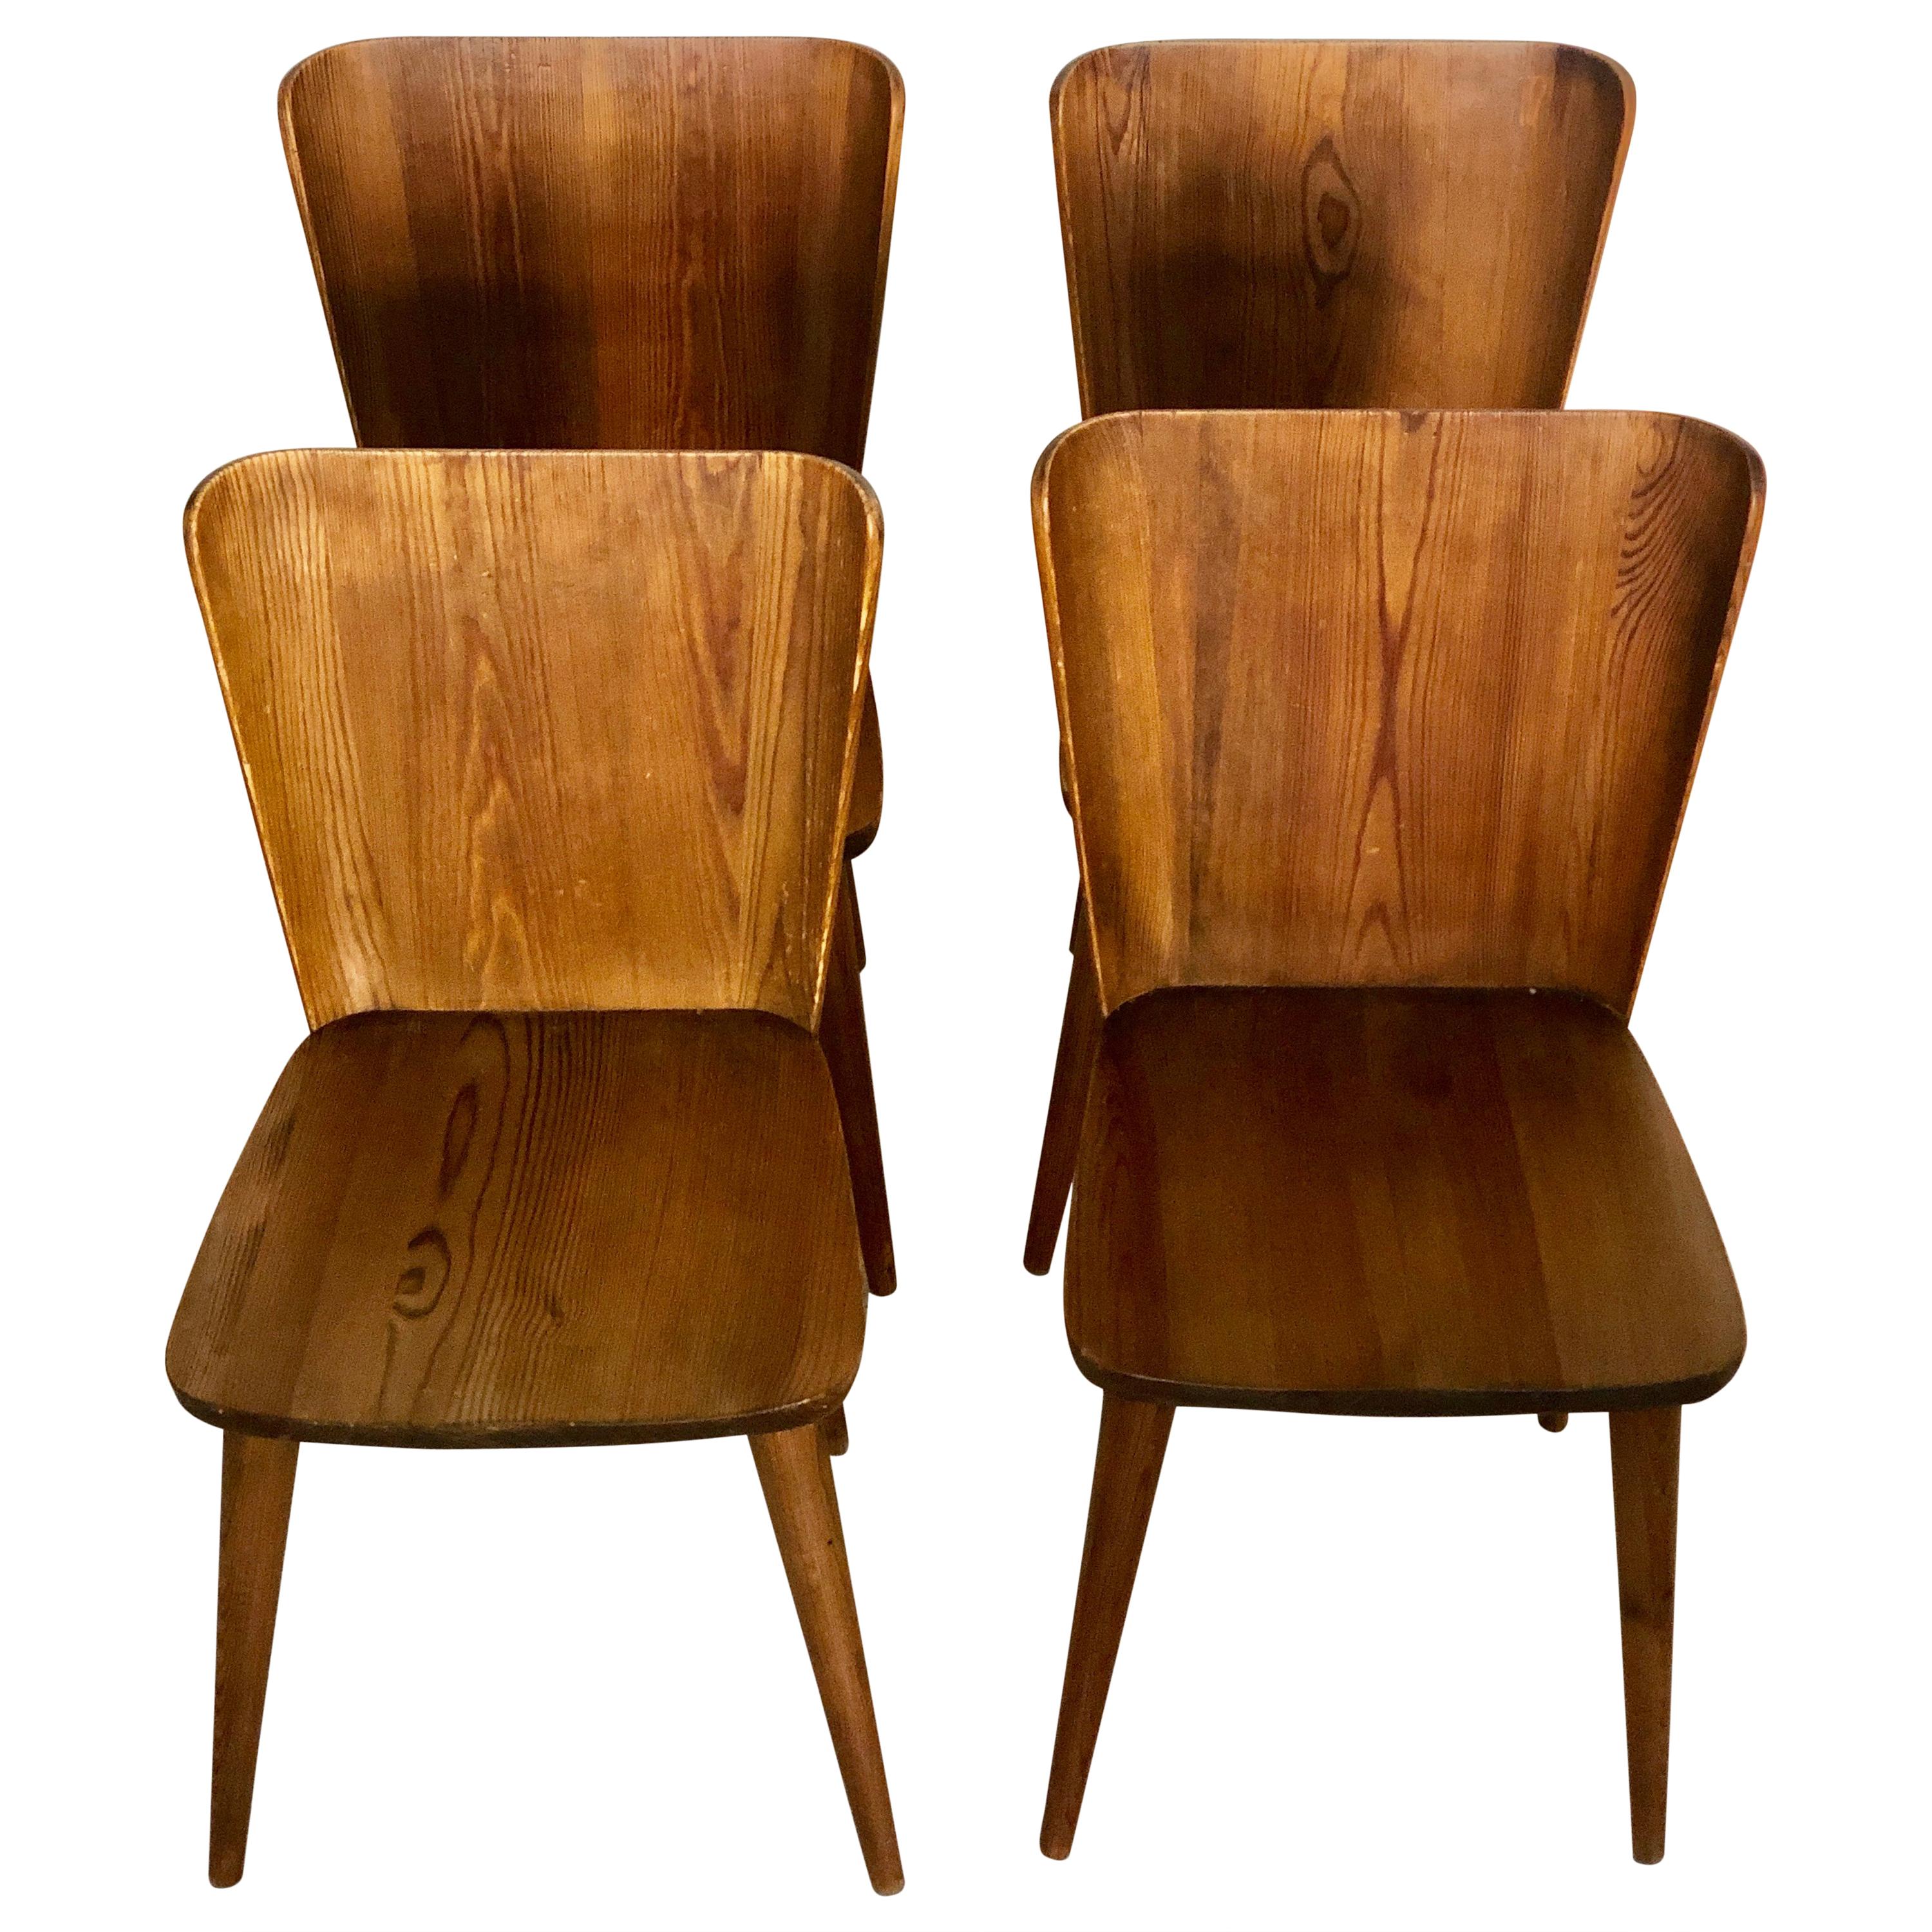 Set of 4 Goran Malmvall Swedish Pine Chairs, Svensk Fur, Sweden, 1940s For Sale